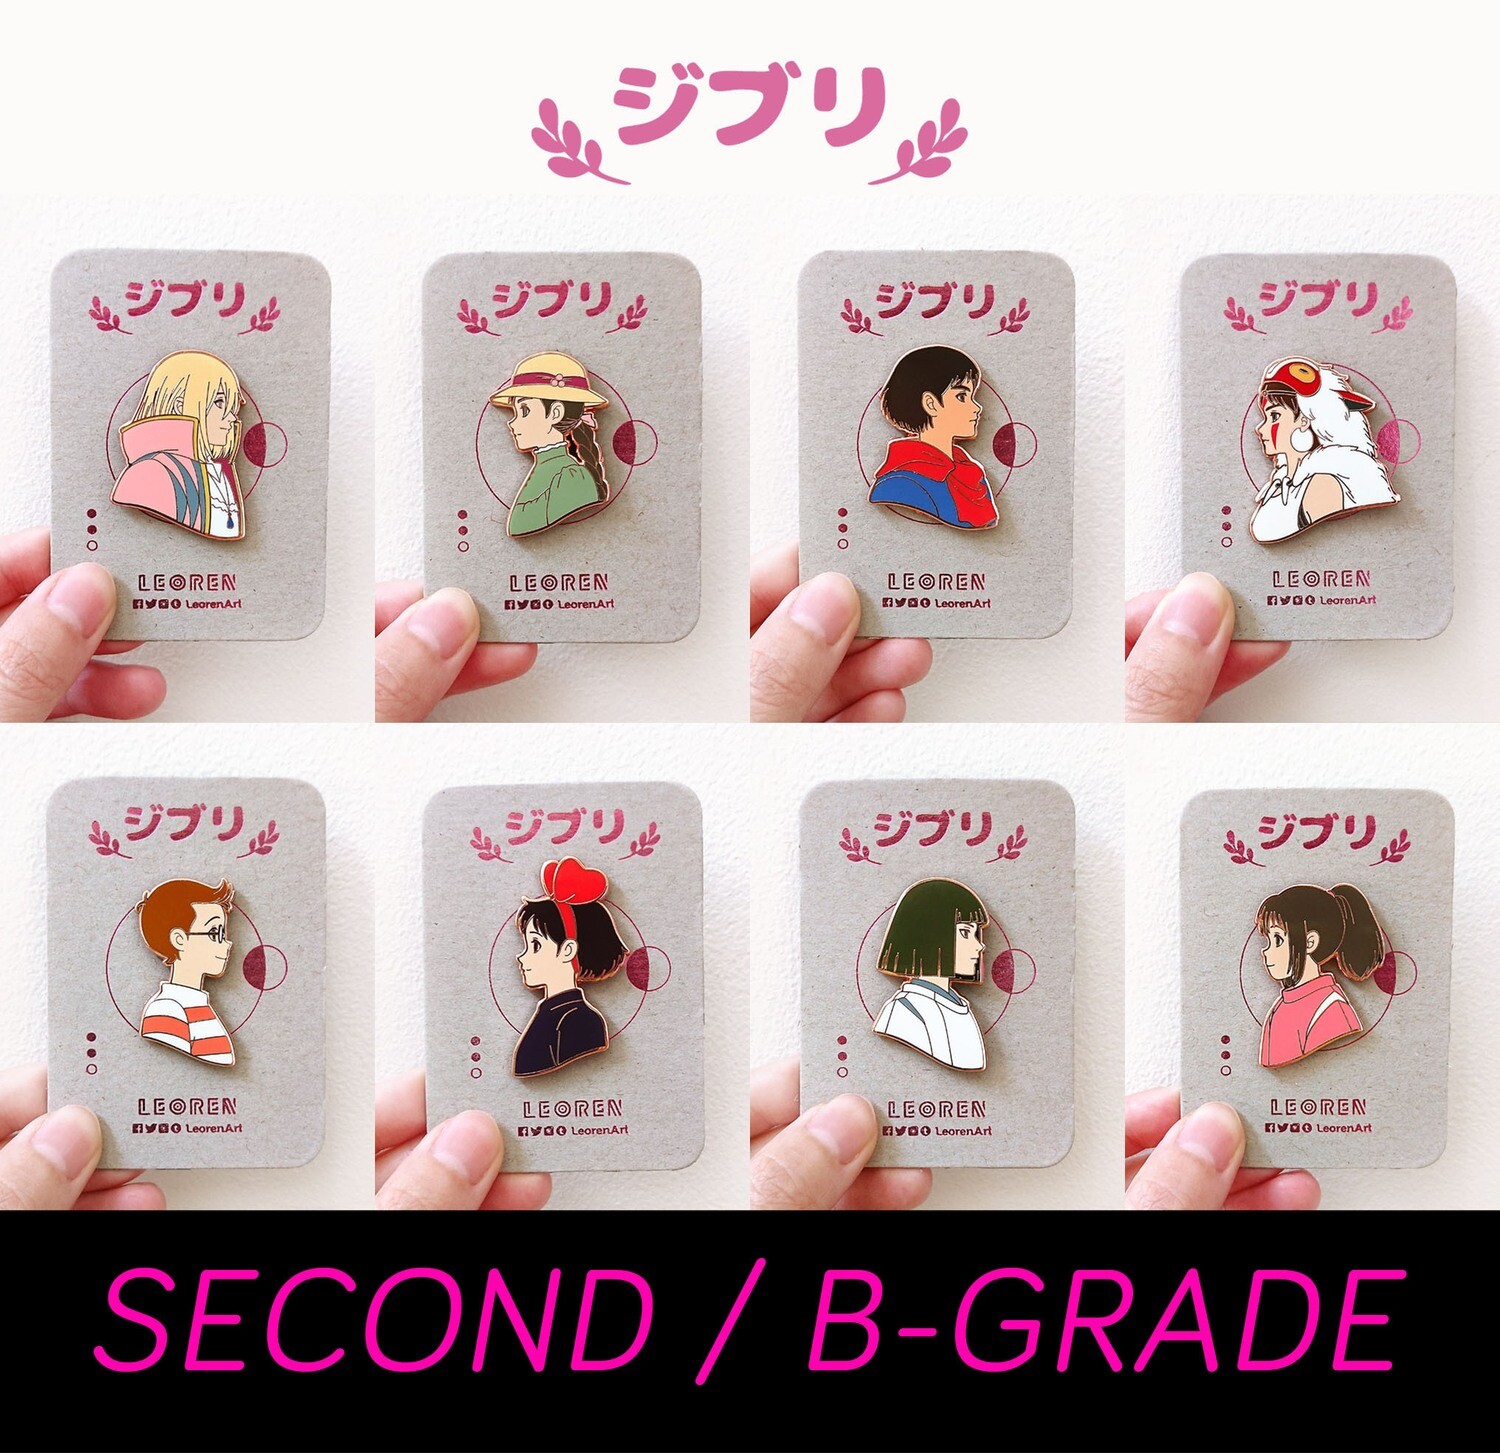 SECONDS / B-GRADE sale - Ghibli - hard enamel pin